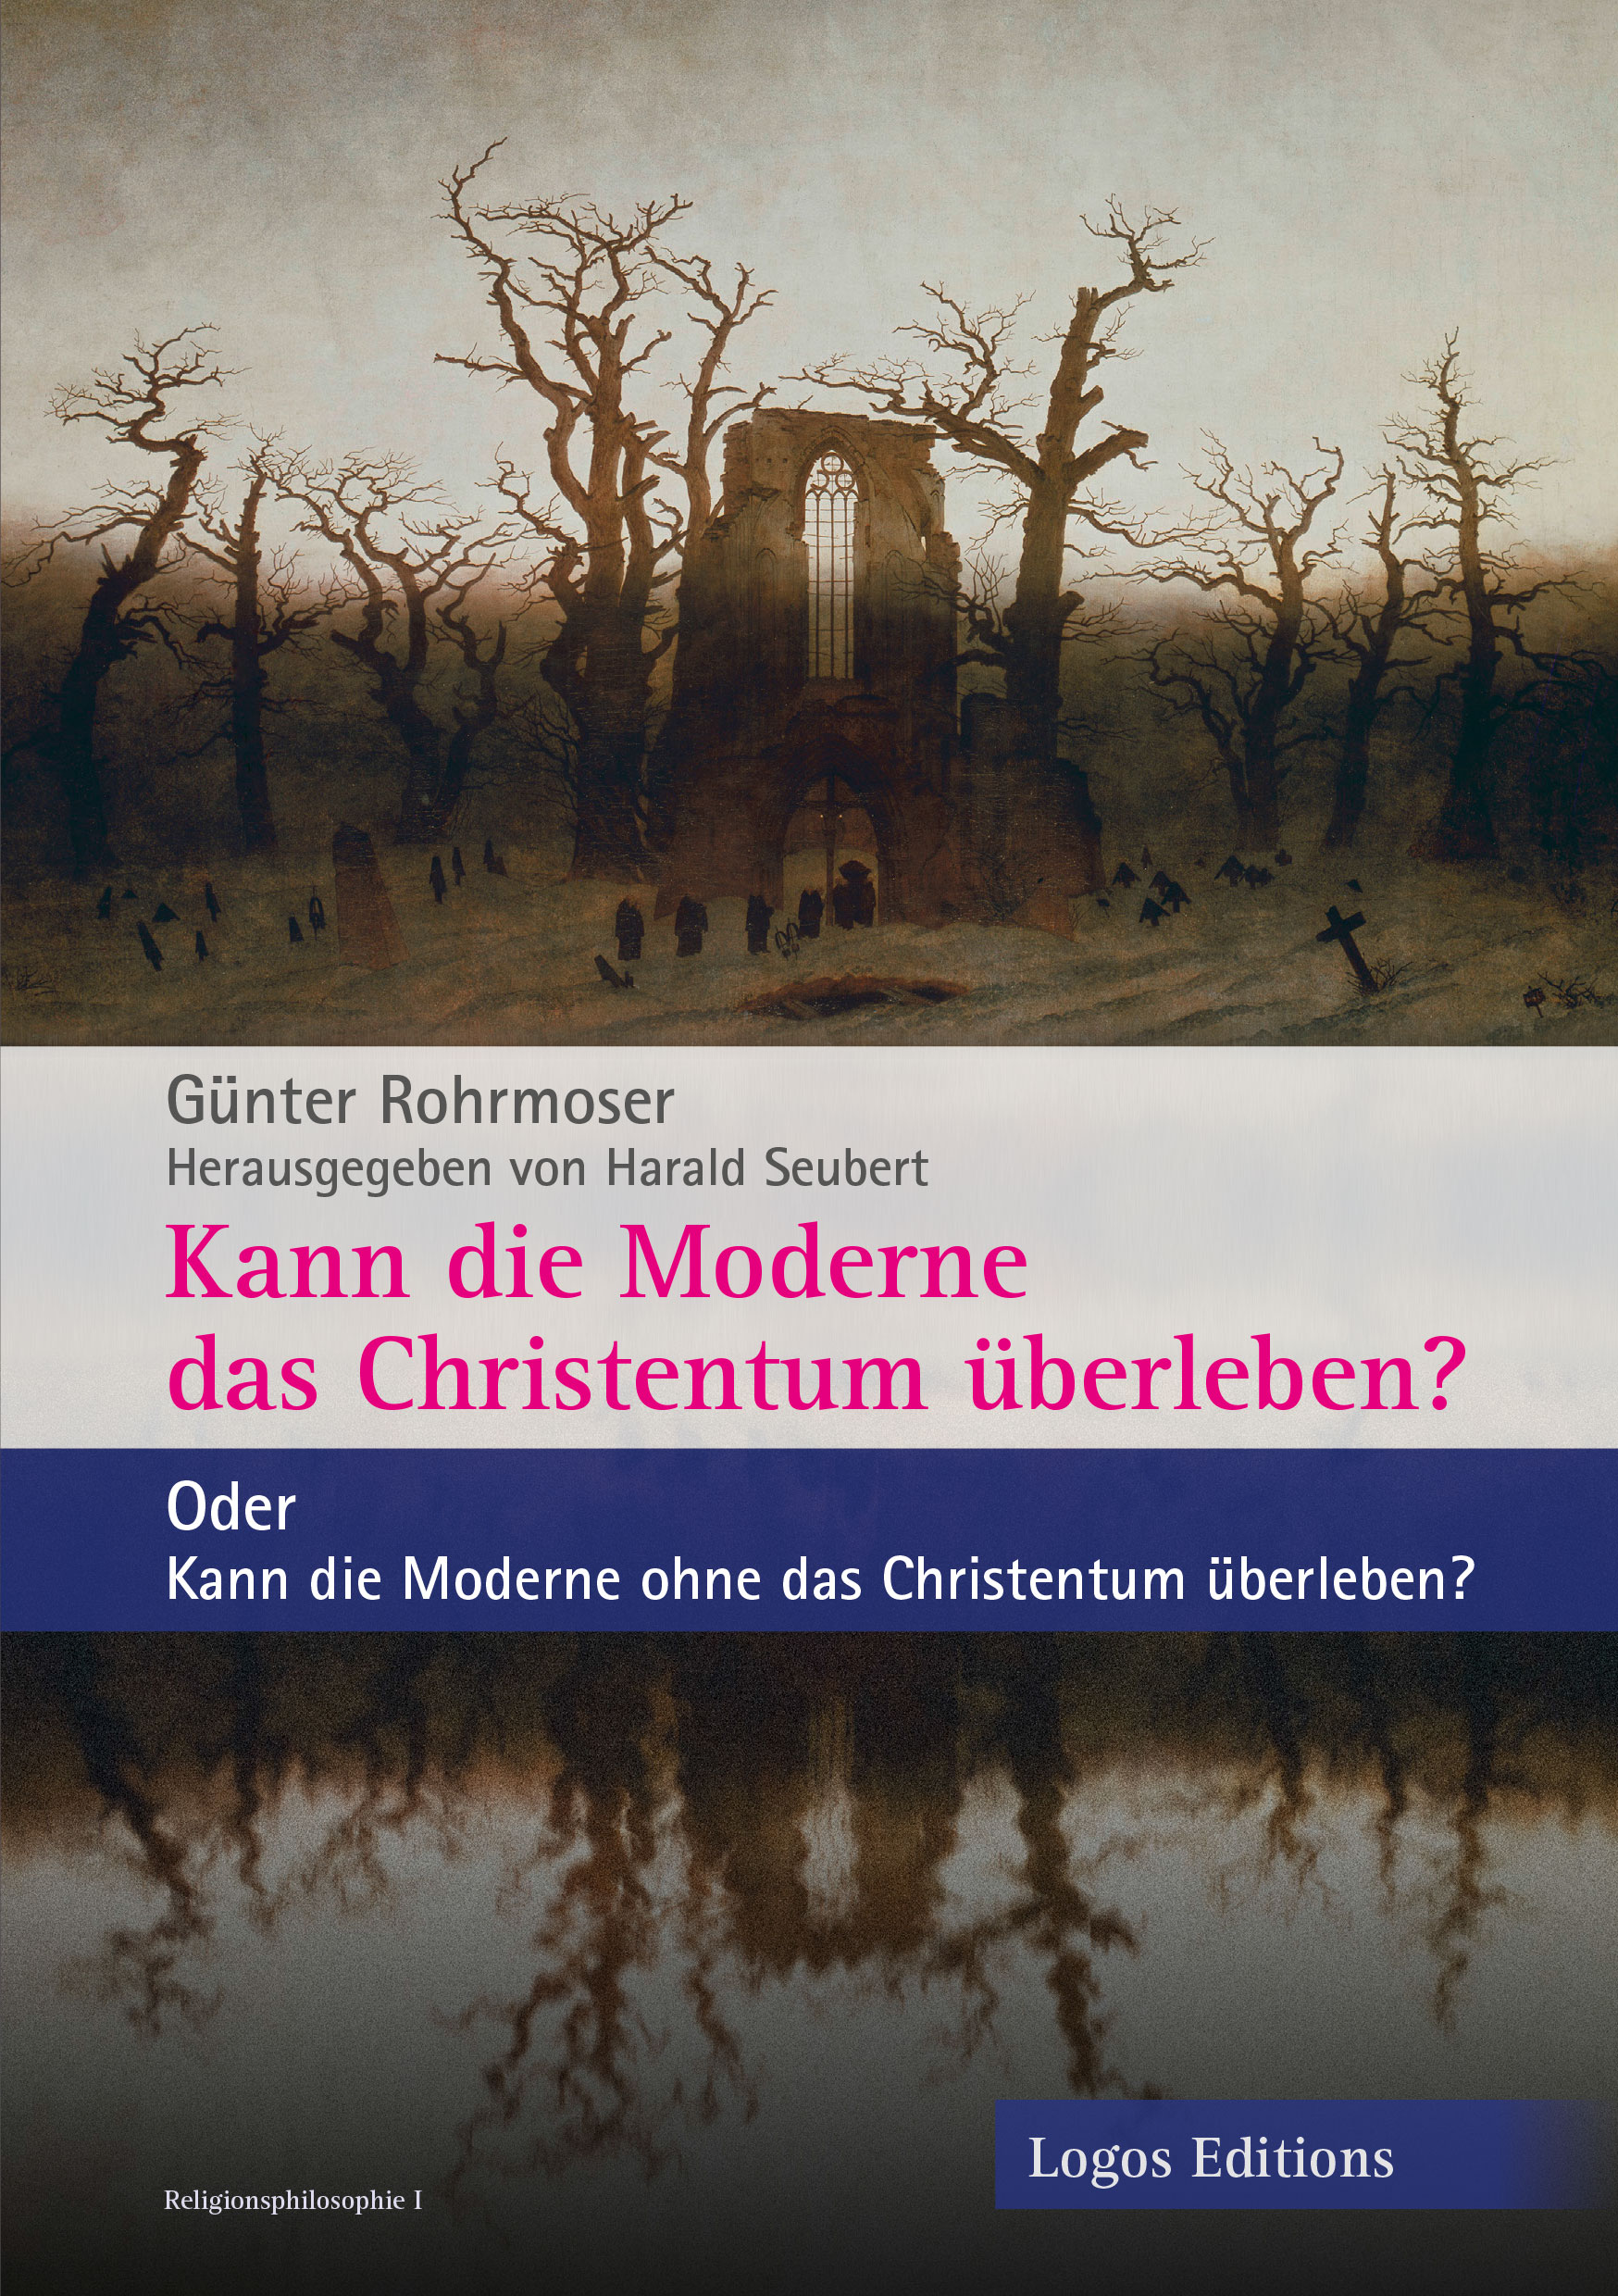 Günter Rohrmoser, Harald Seubert (Hrsg.) “Kann die Moderne das Christentum überleben?” – oder Kann die Moderne ohne das Christentum überleben?